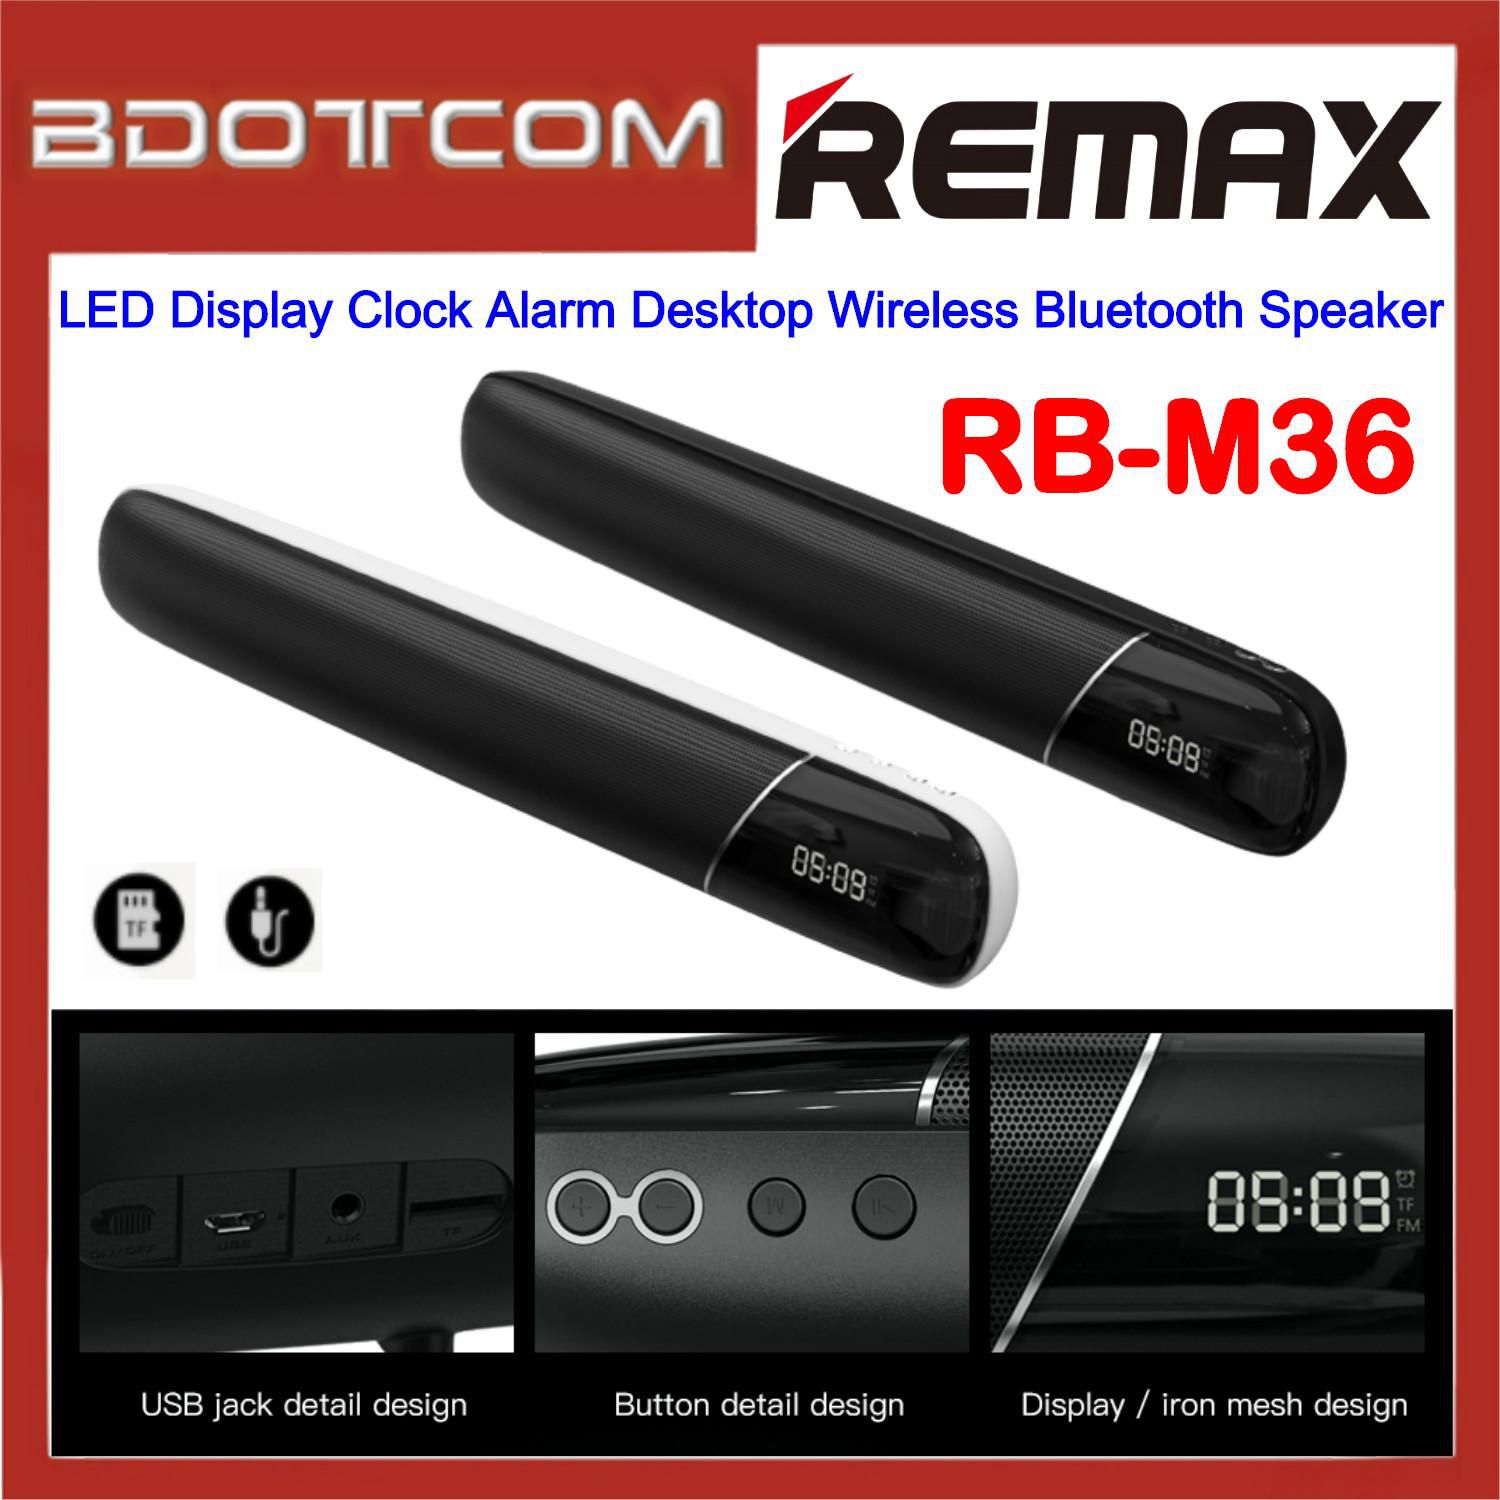 Remax RB-M36 LED Display Clock Alarm Desktop Wireless Bluetooth V4.2 Speaker